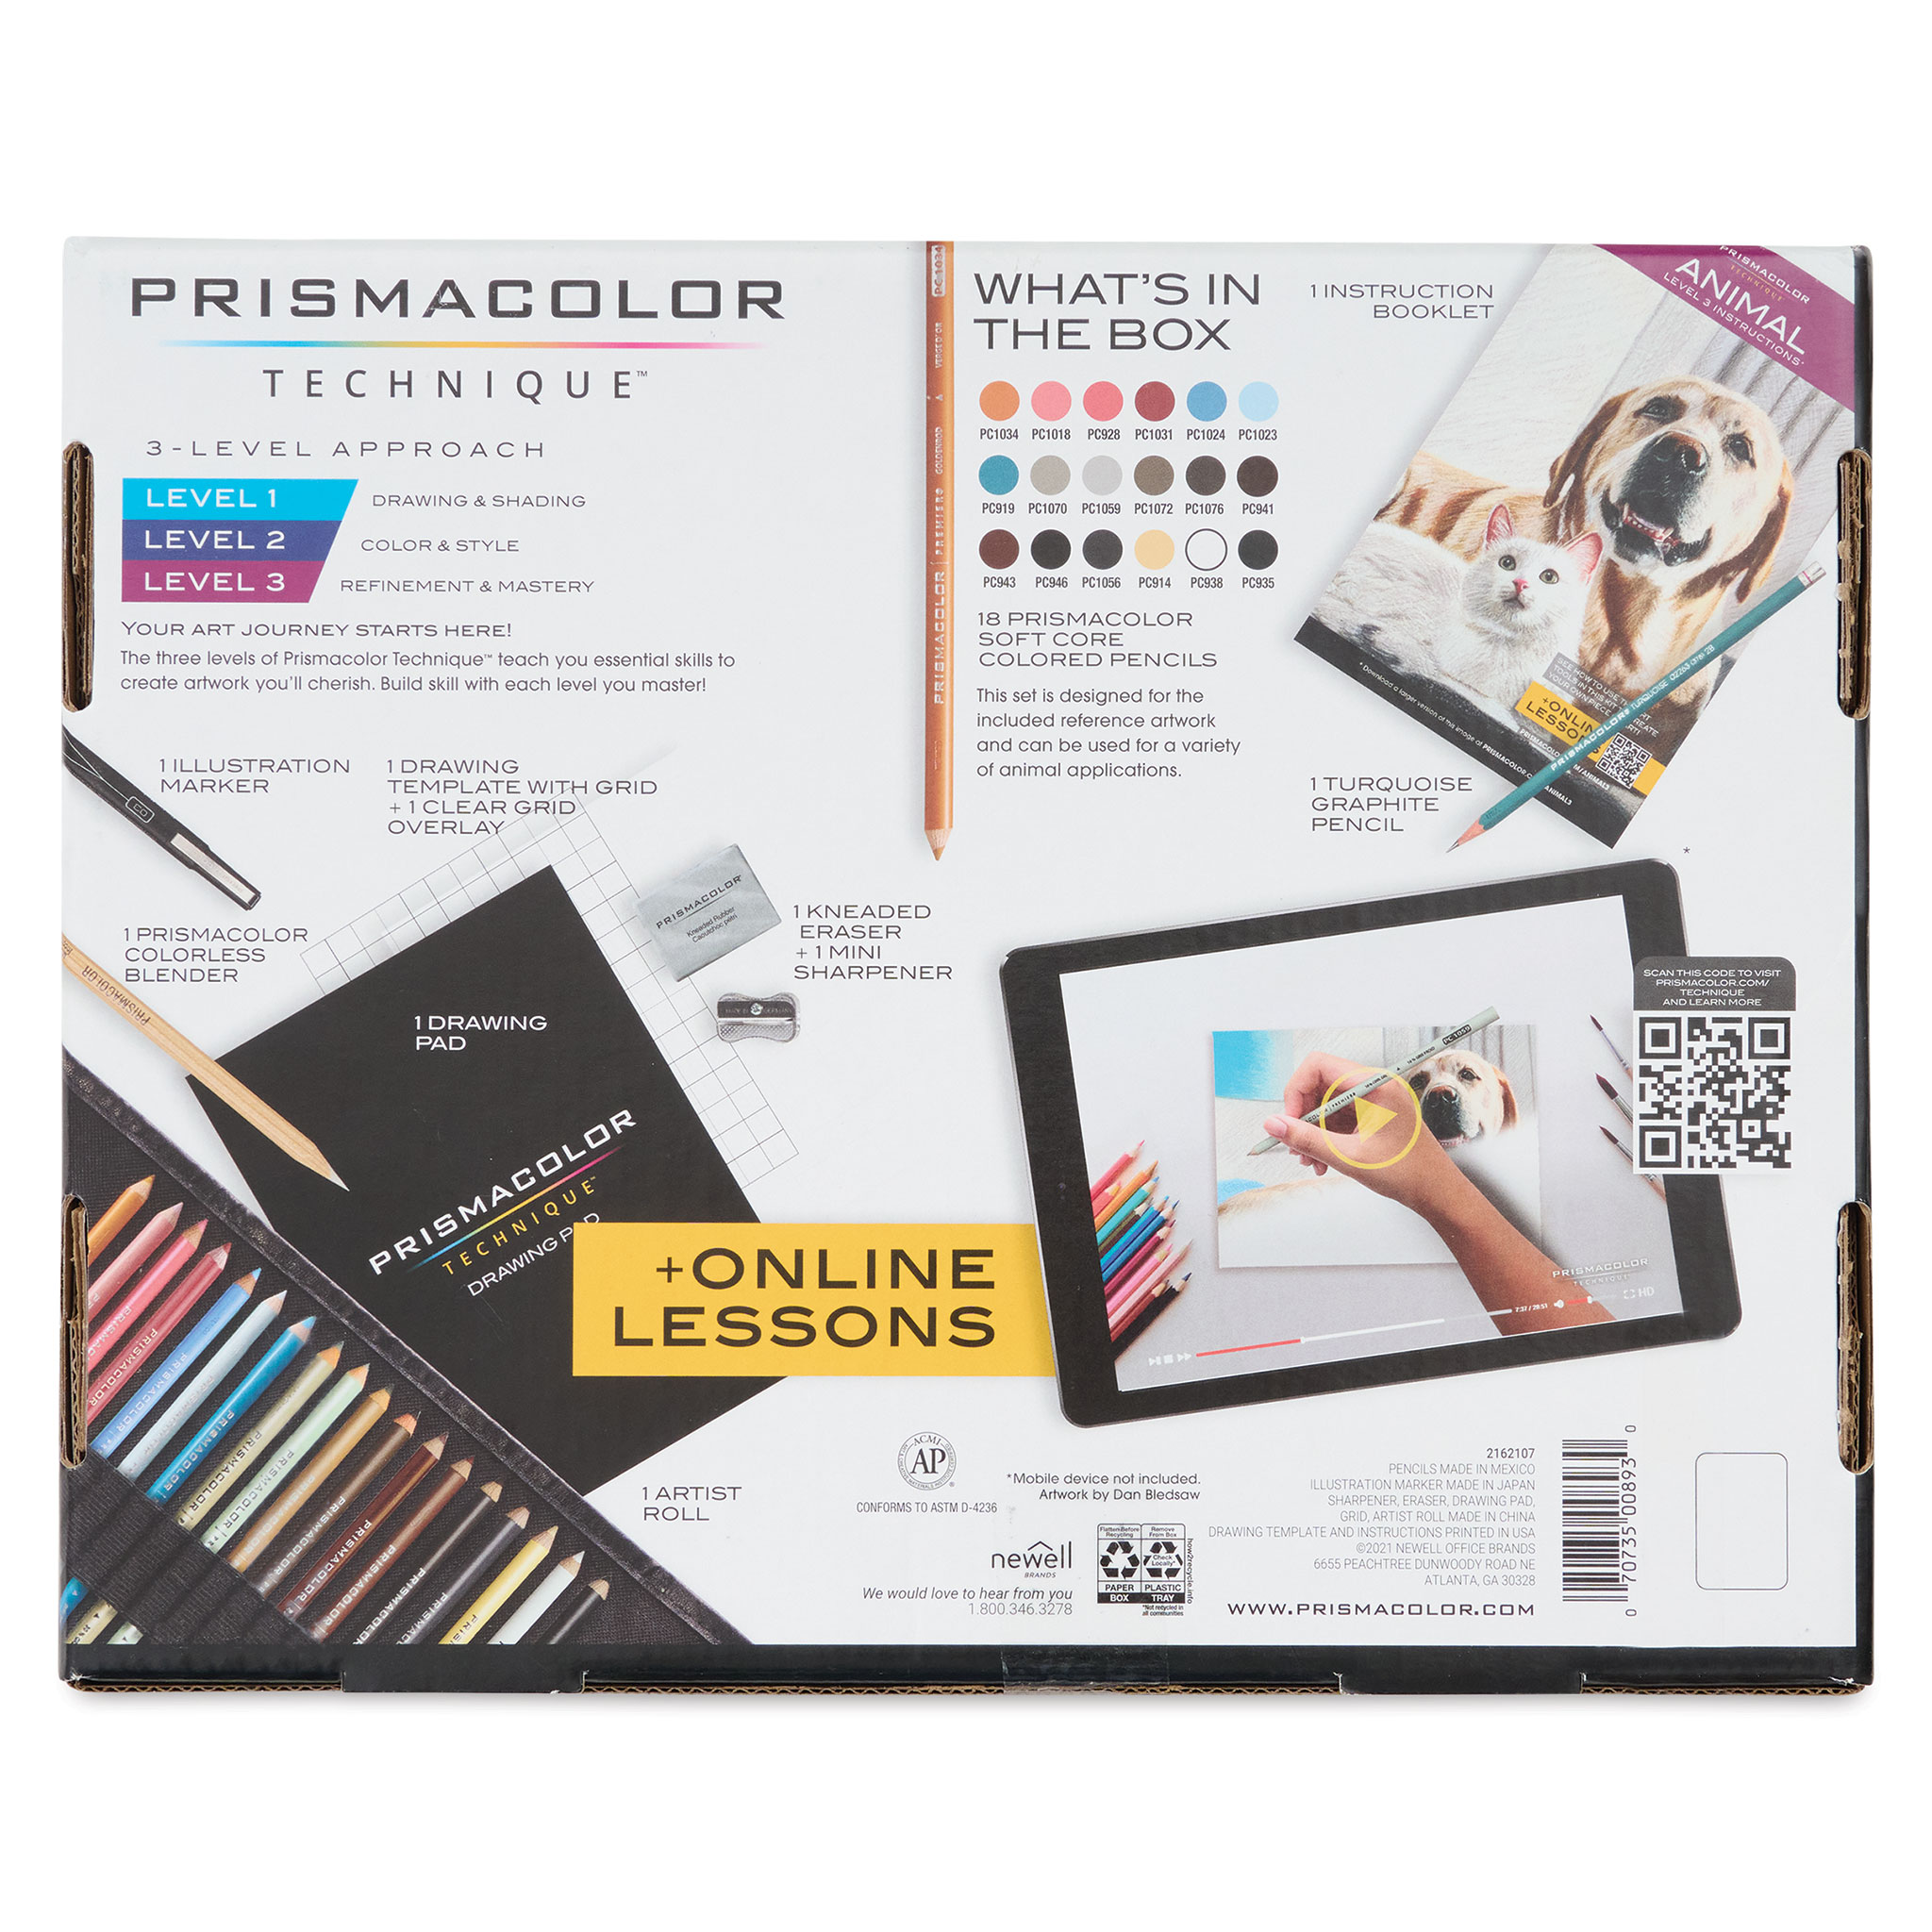 Prismacolor Level 3 Animal Drawing Set w/ Online Lessons 18